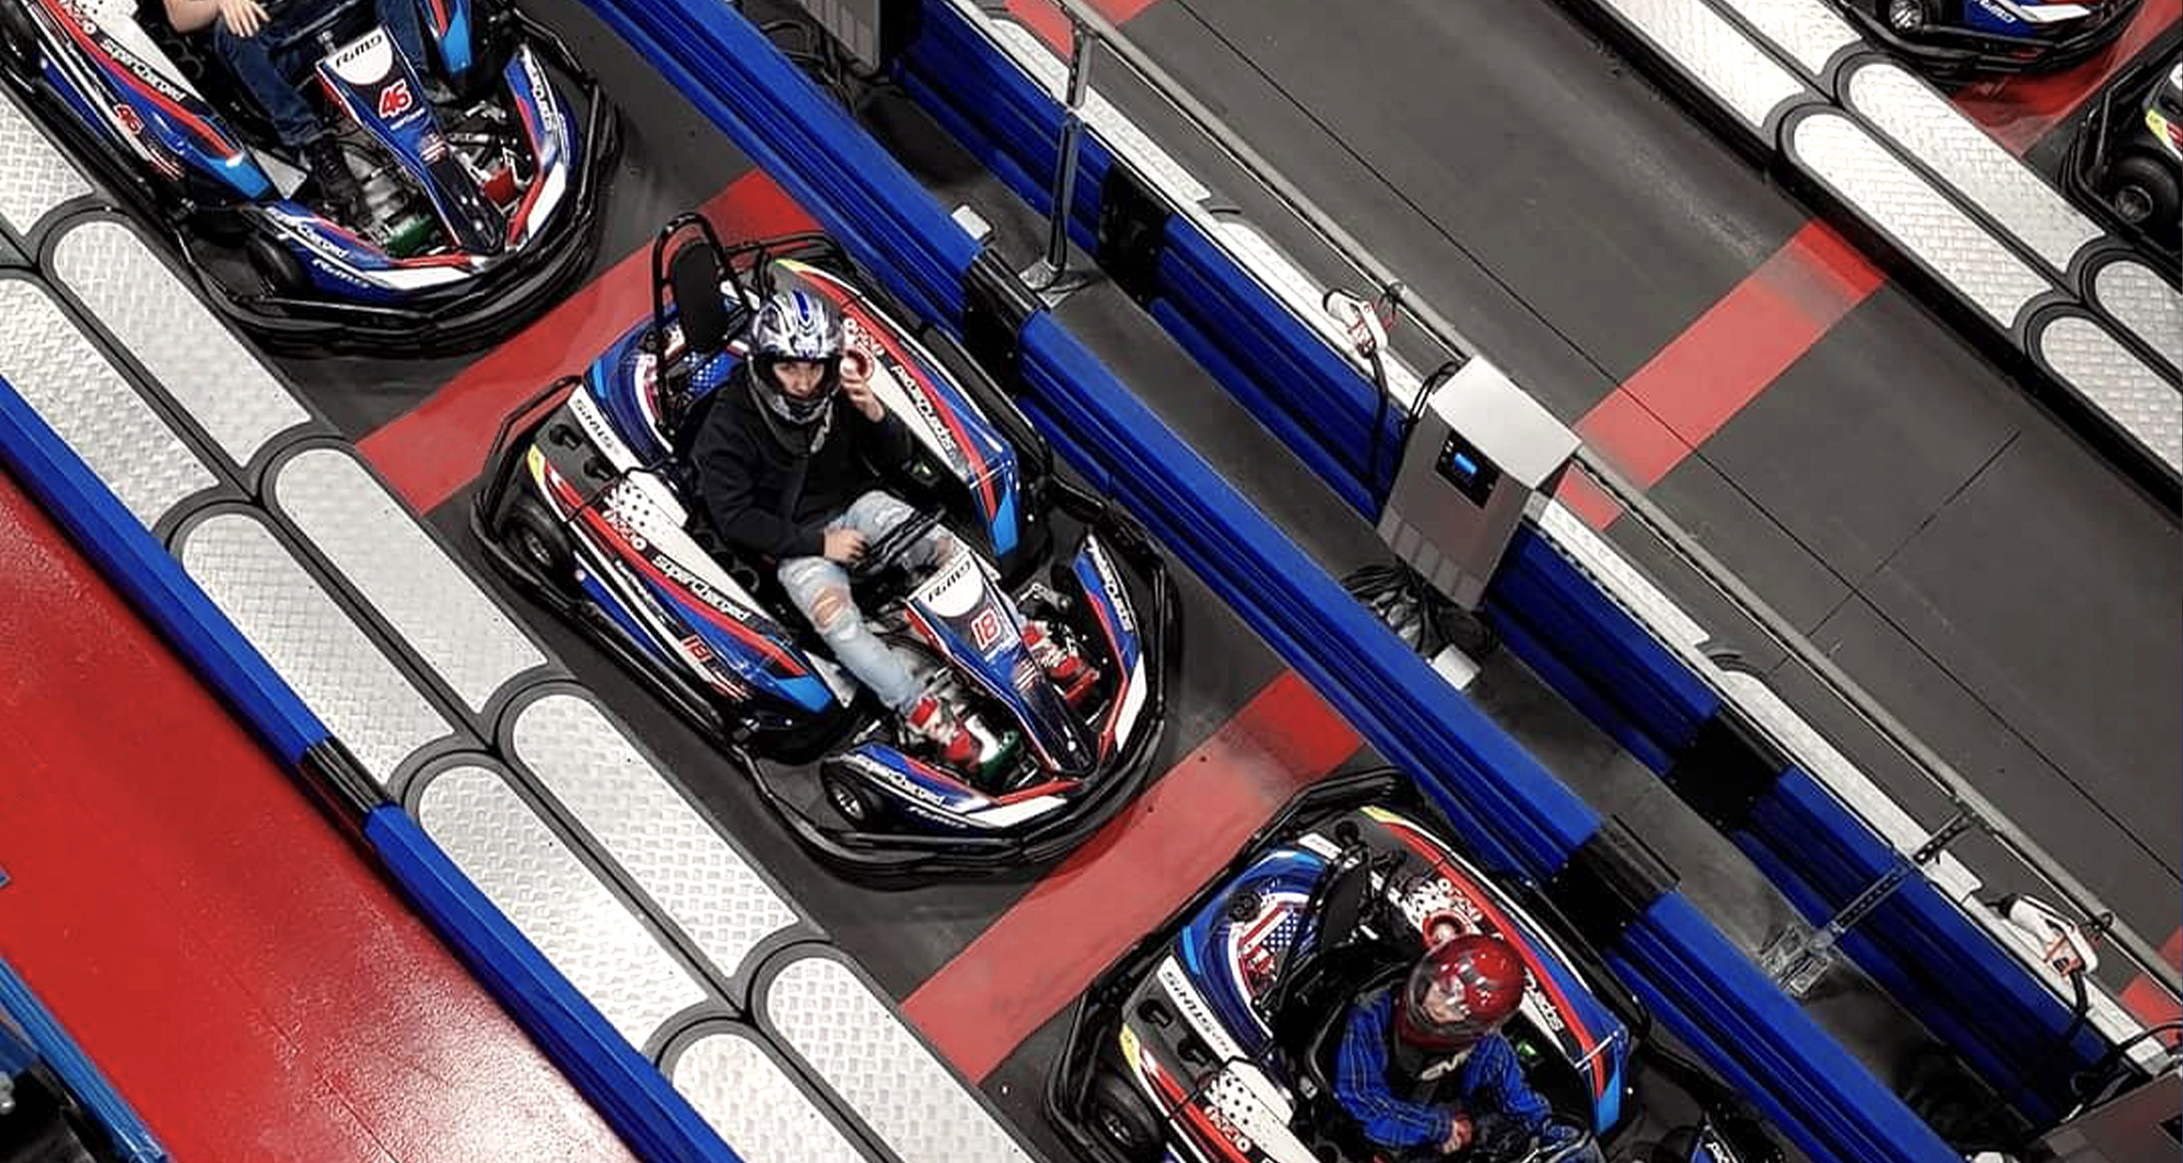 Indoor Karting – Supercharged